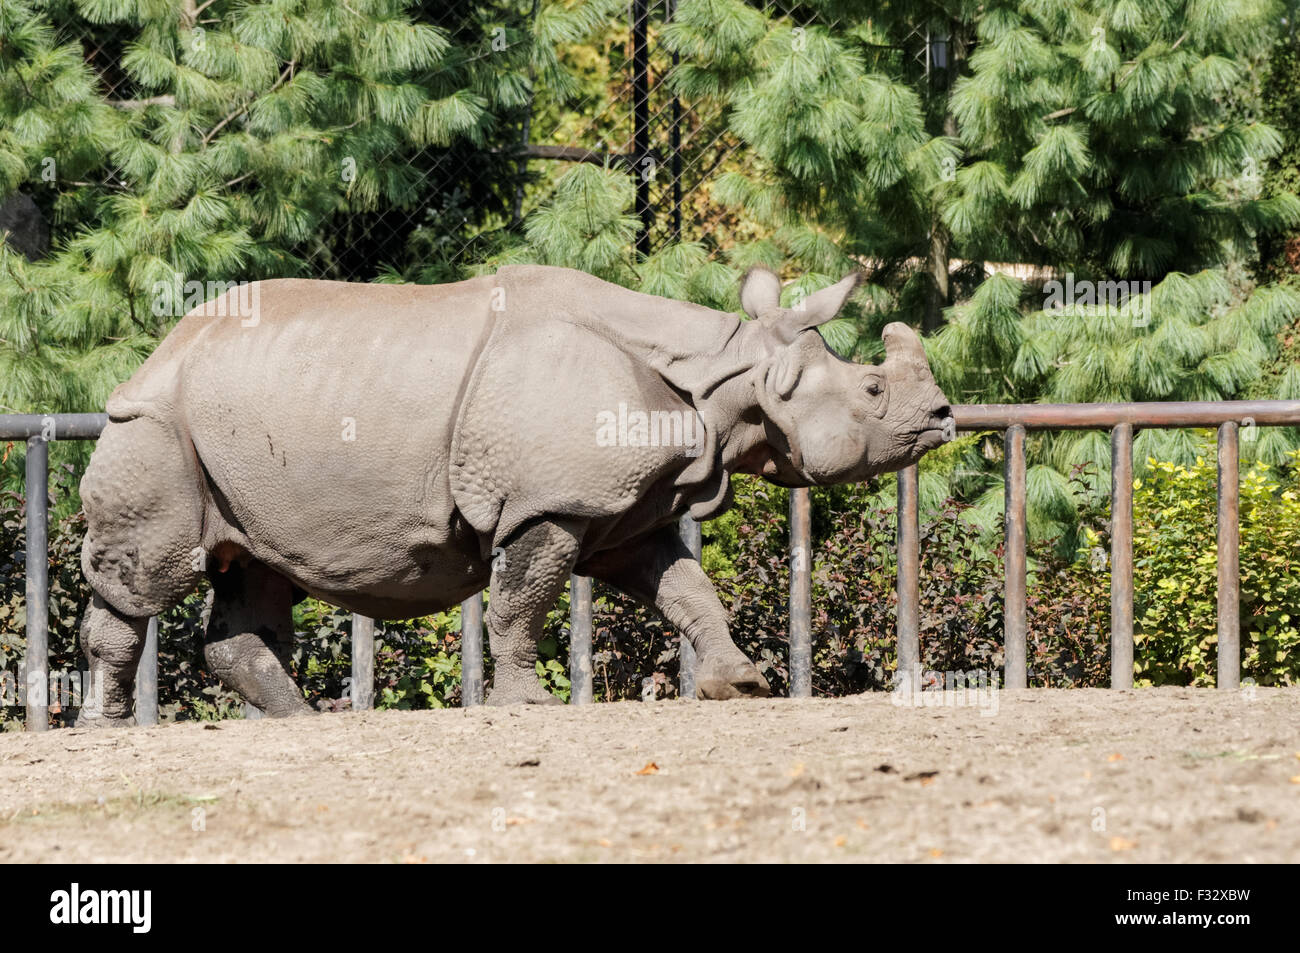 The Indian rhinoceros (Rhinoceros unicornis) at Warsaw Zoo, Poland Stock Photo